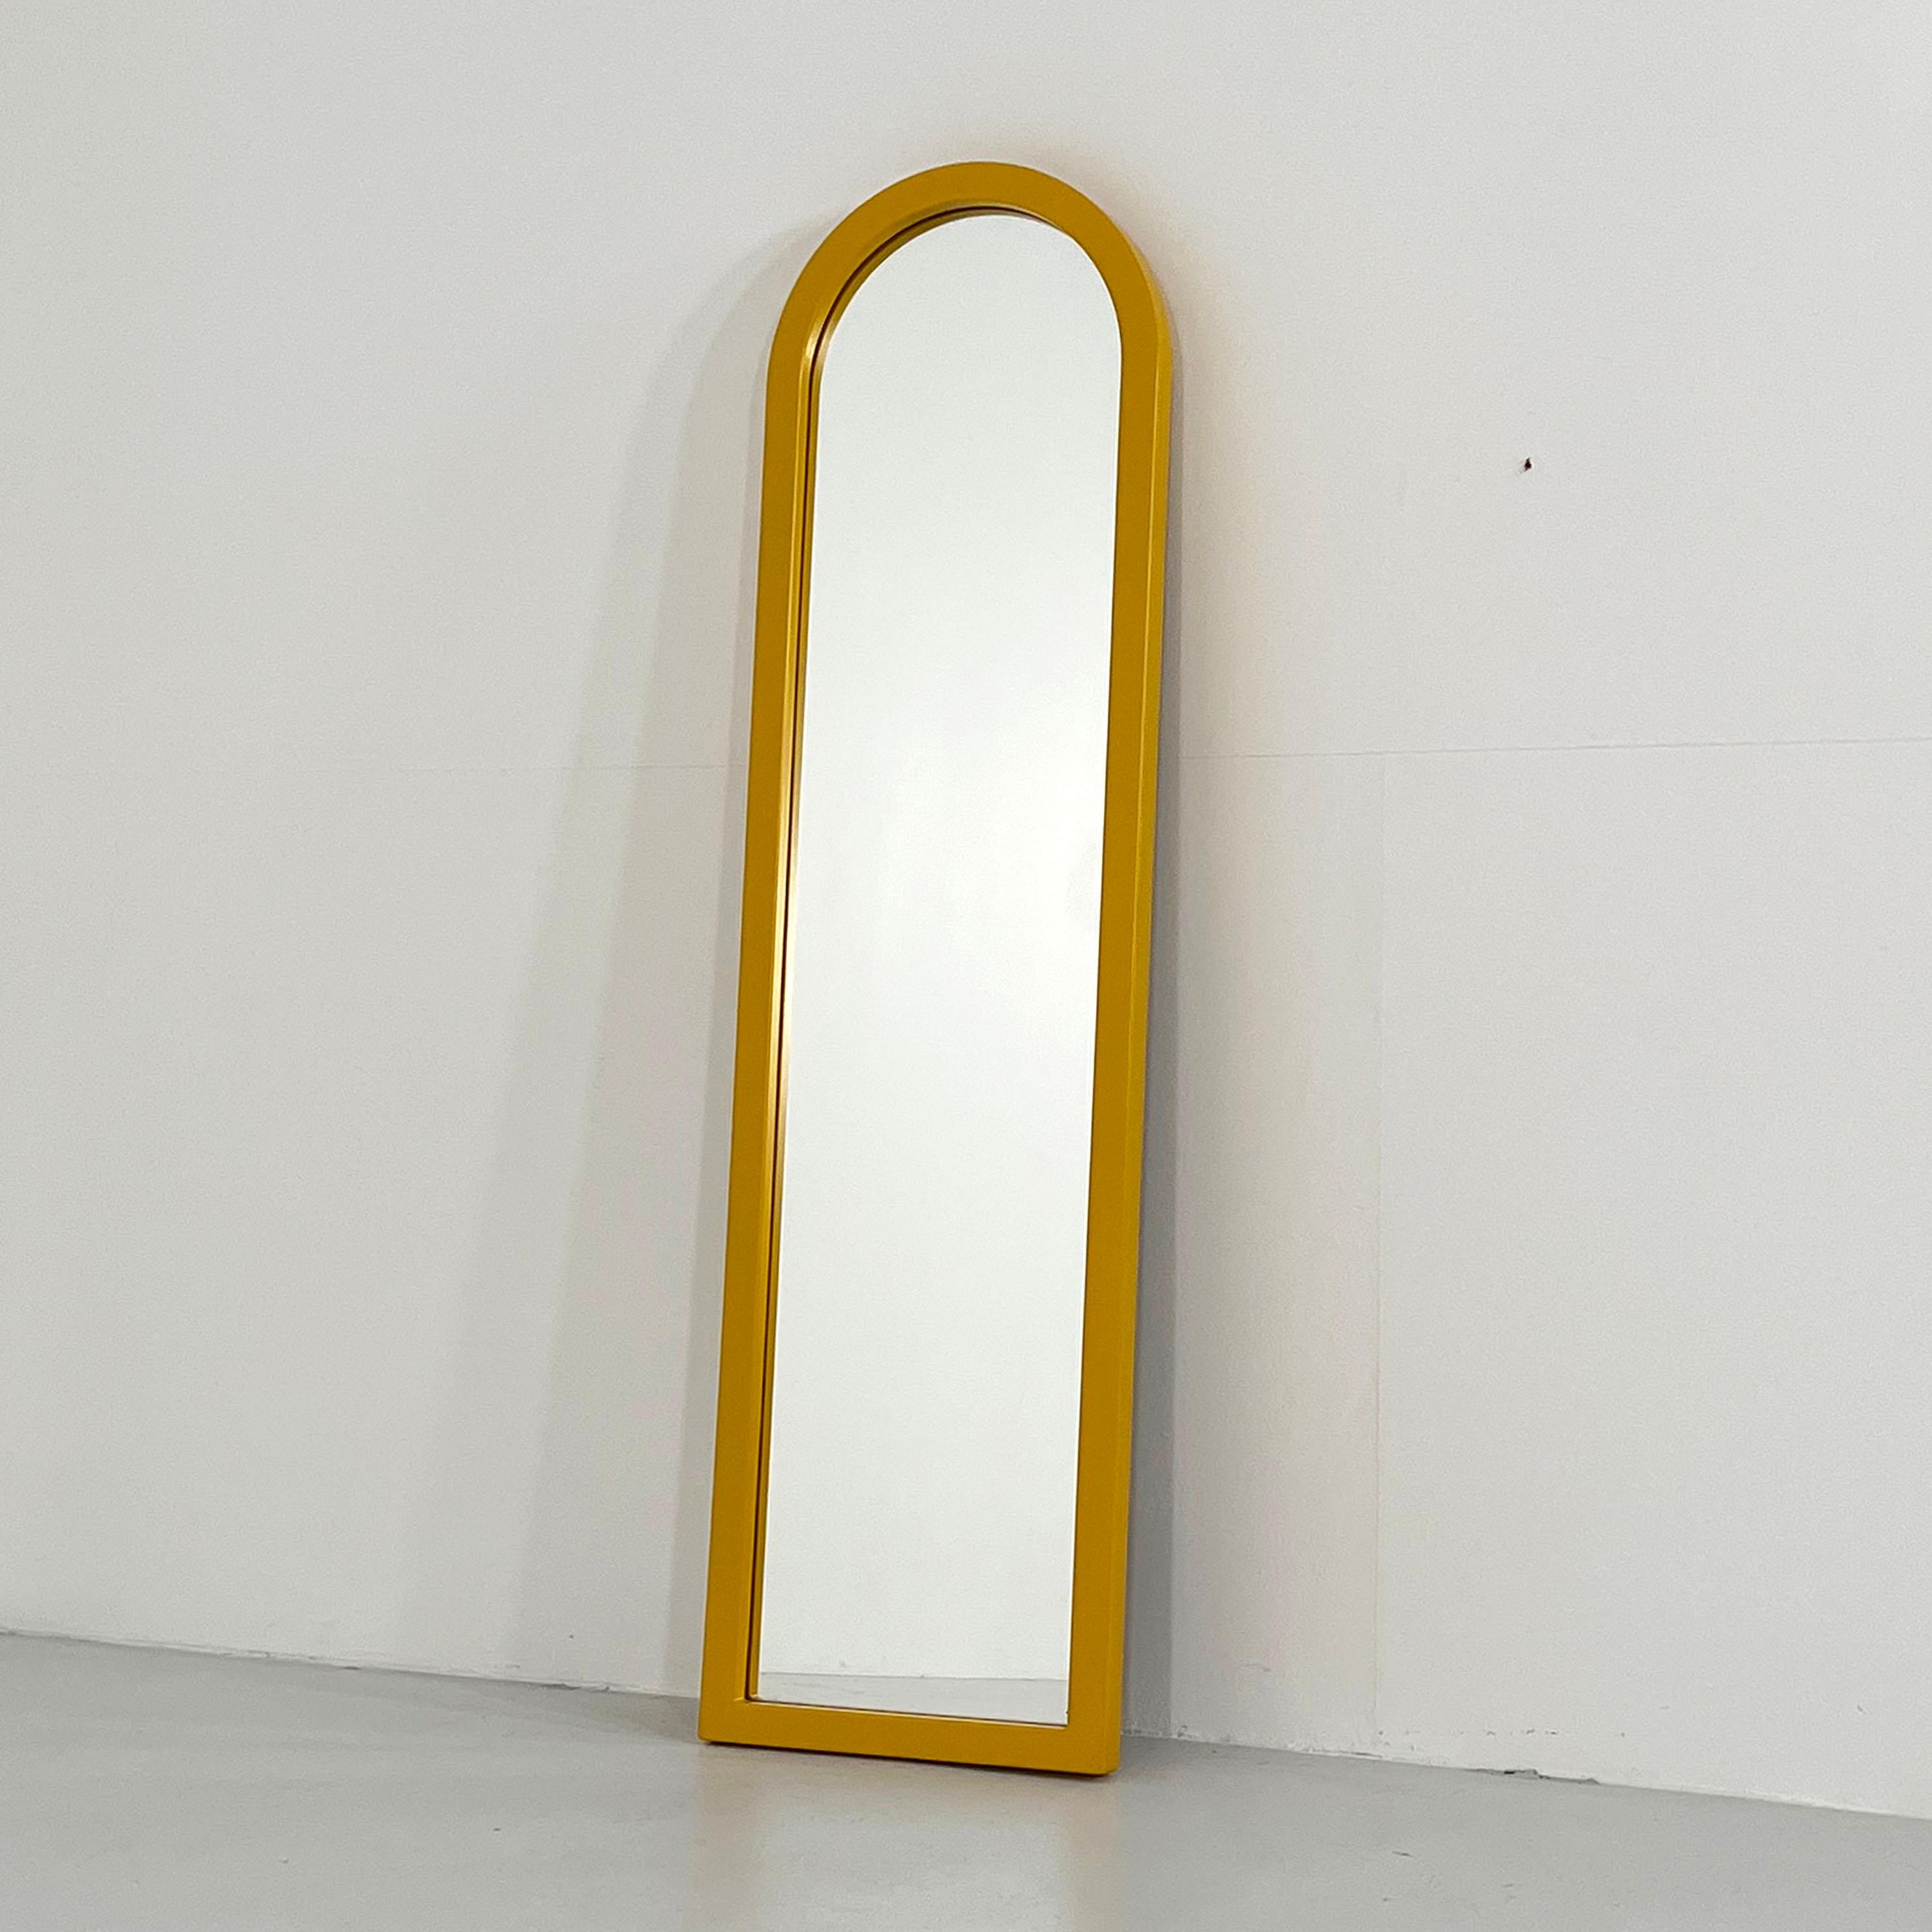 Yellow Framem mirror by Anna Castelli Ferrieri for Kartell, 1980s
Designer - Anna Castelli Ferrieri
Producer - Kartell
Design Period - Eighties
Measurements - Width 30 cm x Depth 4 cm x Height 110 cm
Materials - Expanded polyurethane,